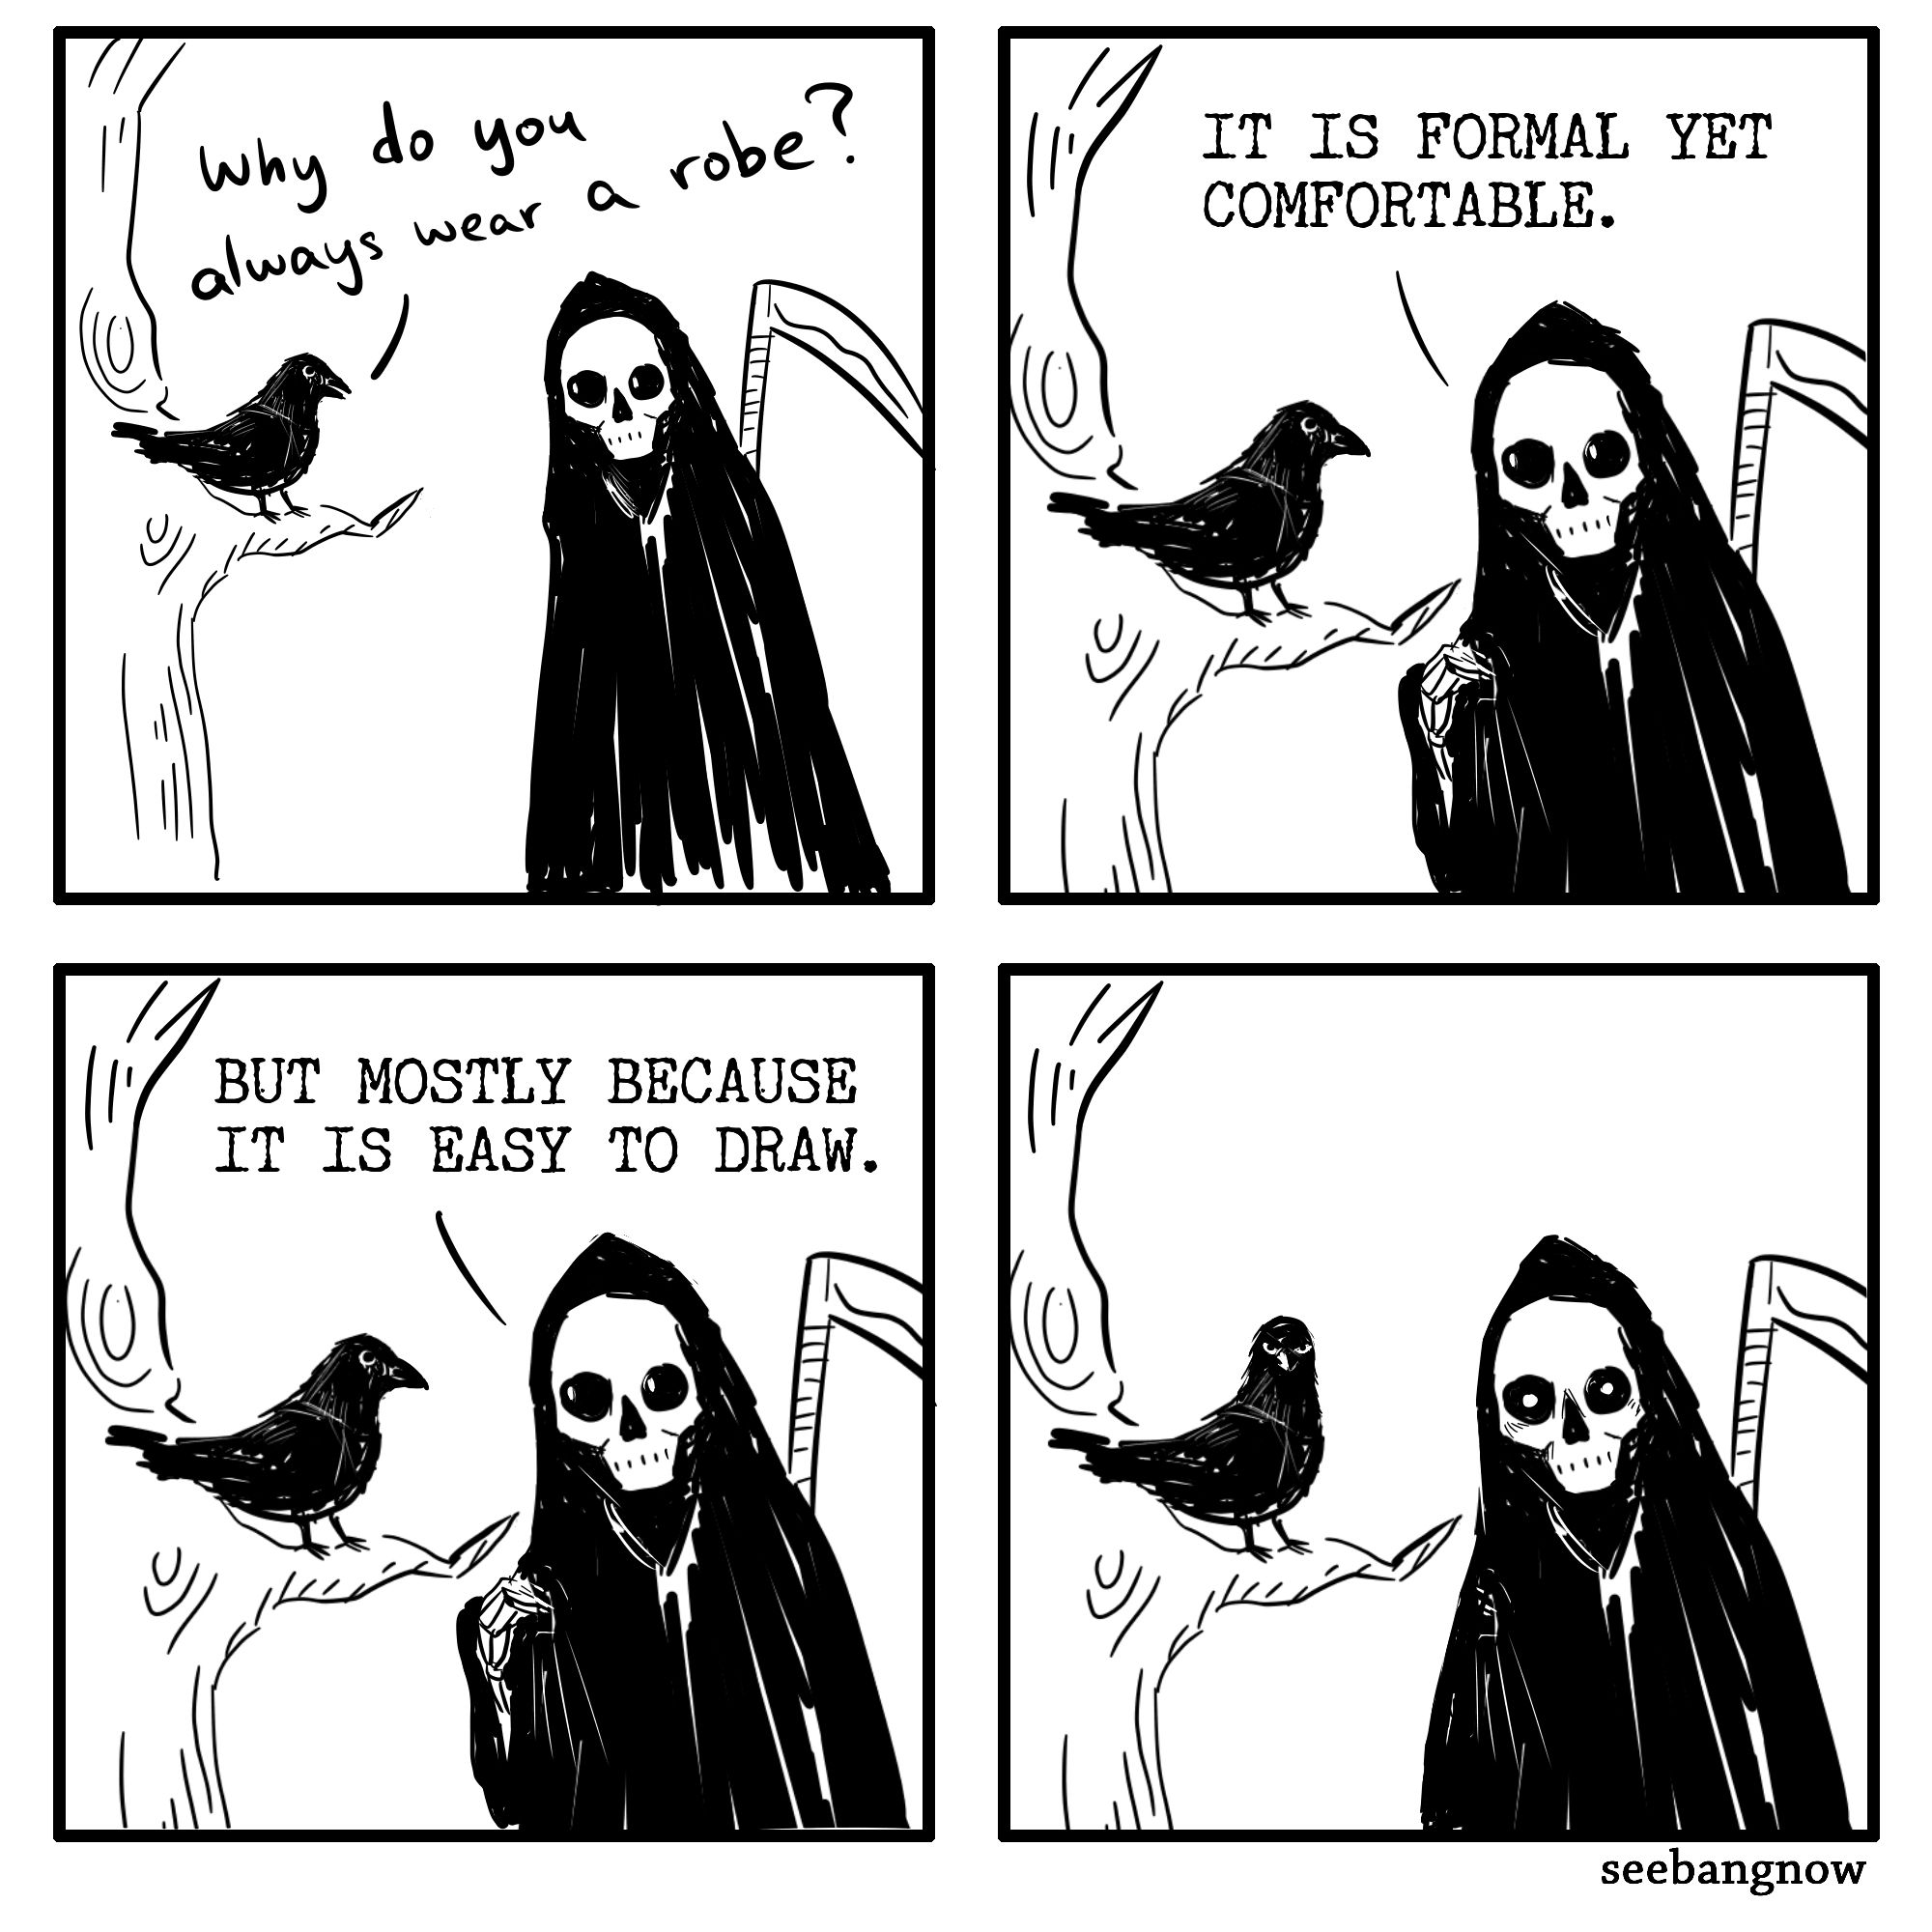 Death's robes